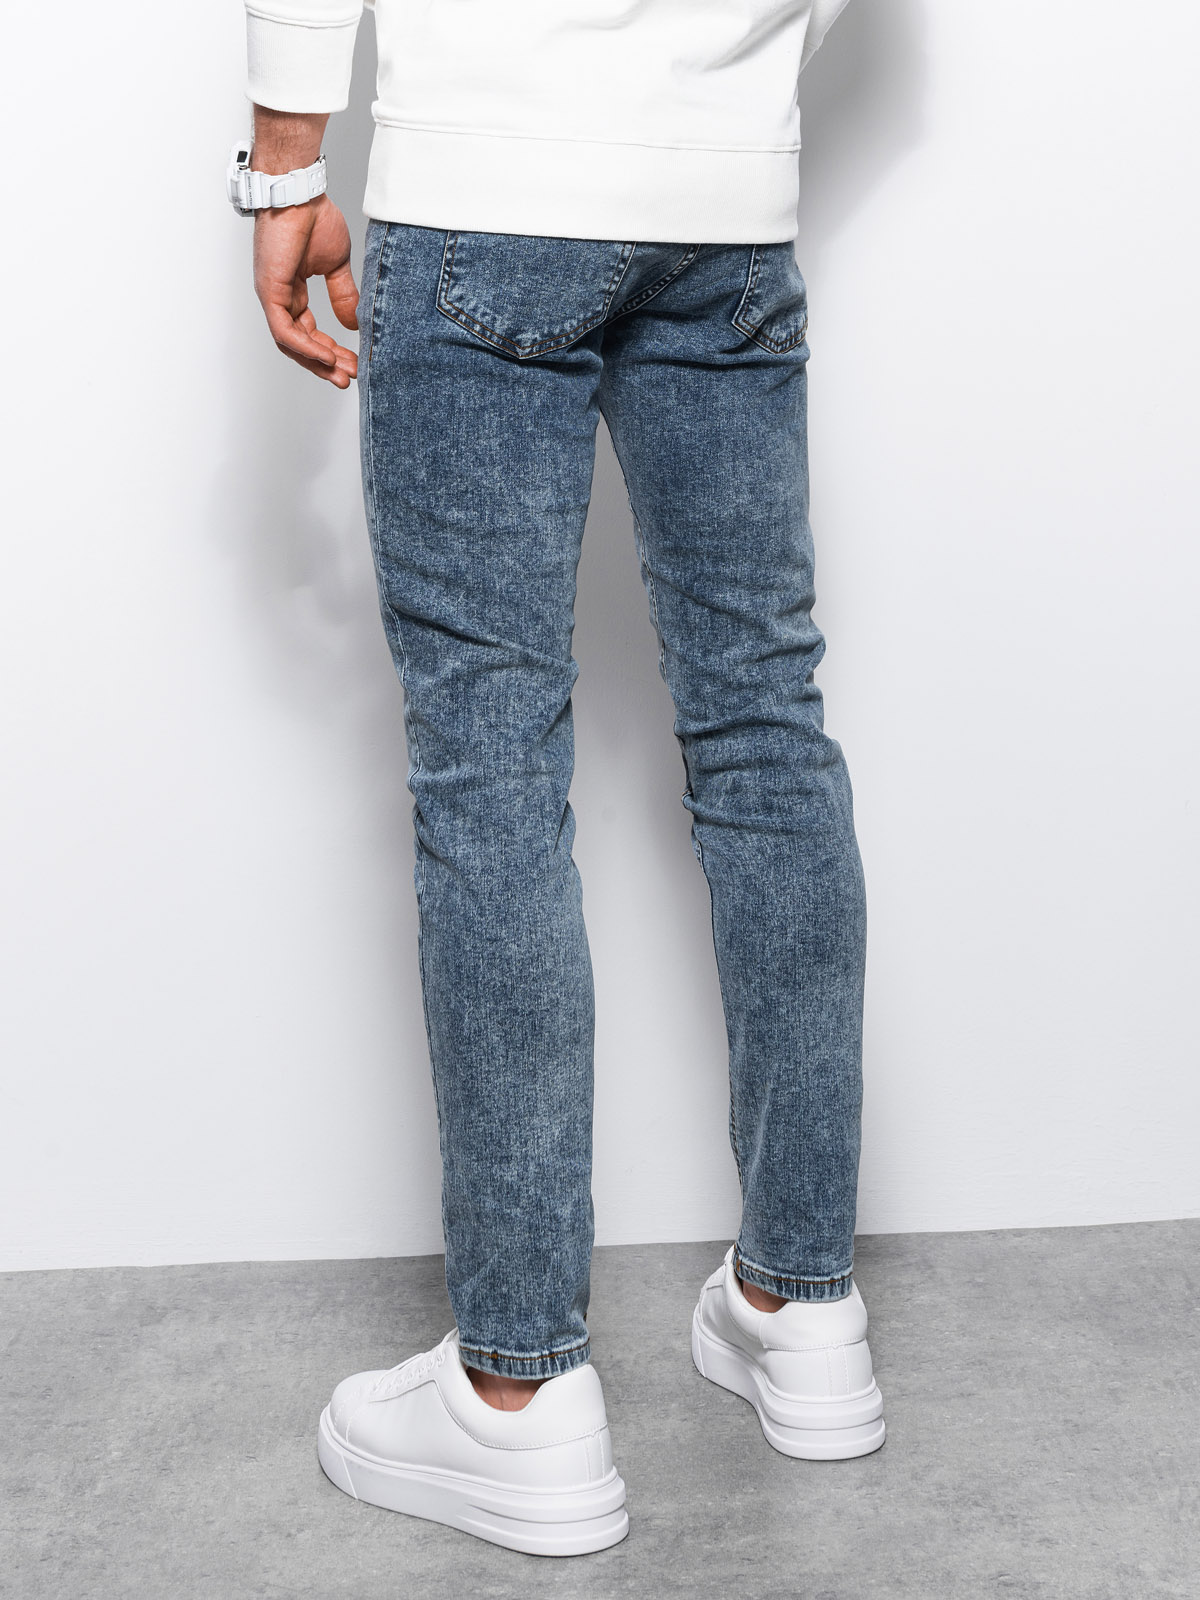 Men's jeans SKINNY FIT - blue P1062  - Men's clothing online